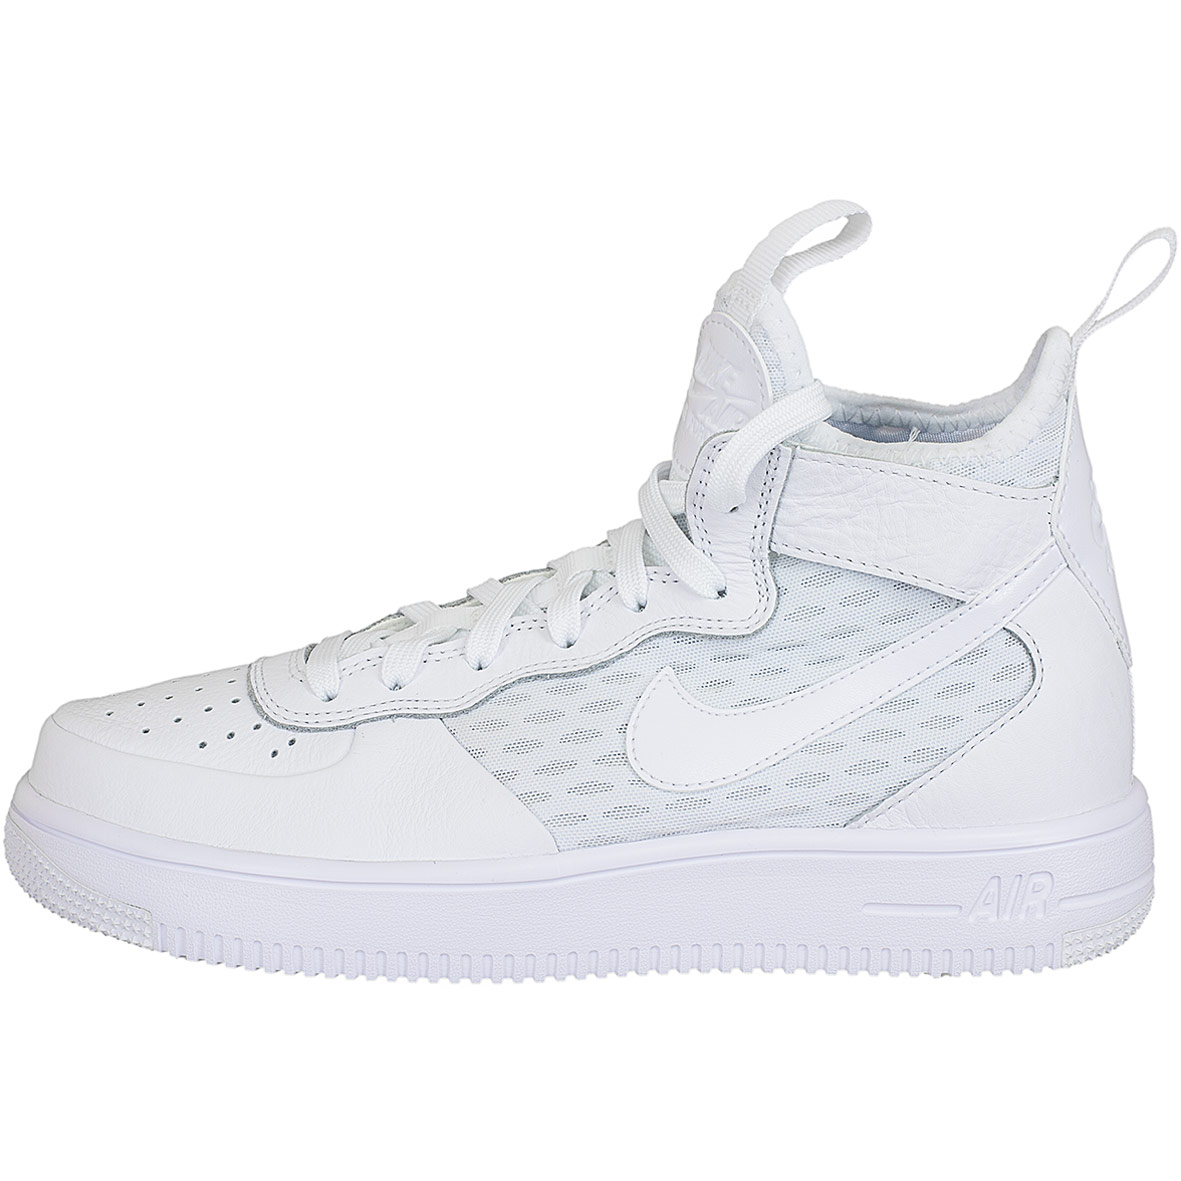 ☆ Nike Damen Sneaker Air Force 1 Ultraforce Mid weiß/weiß - hier bestellen!